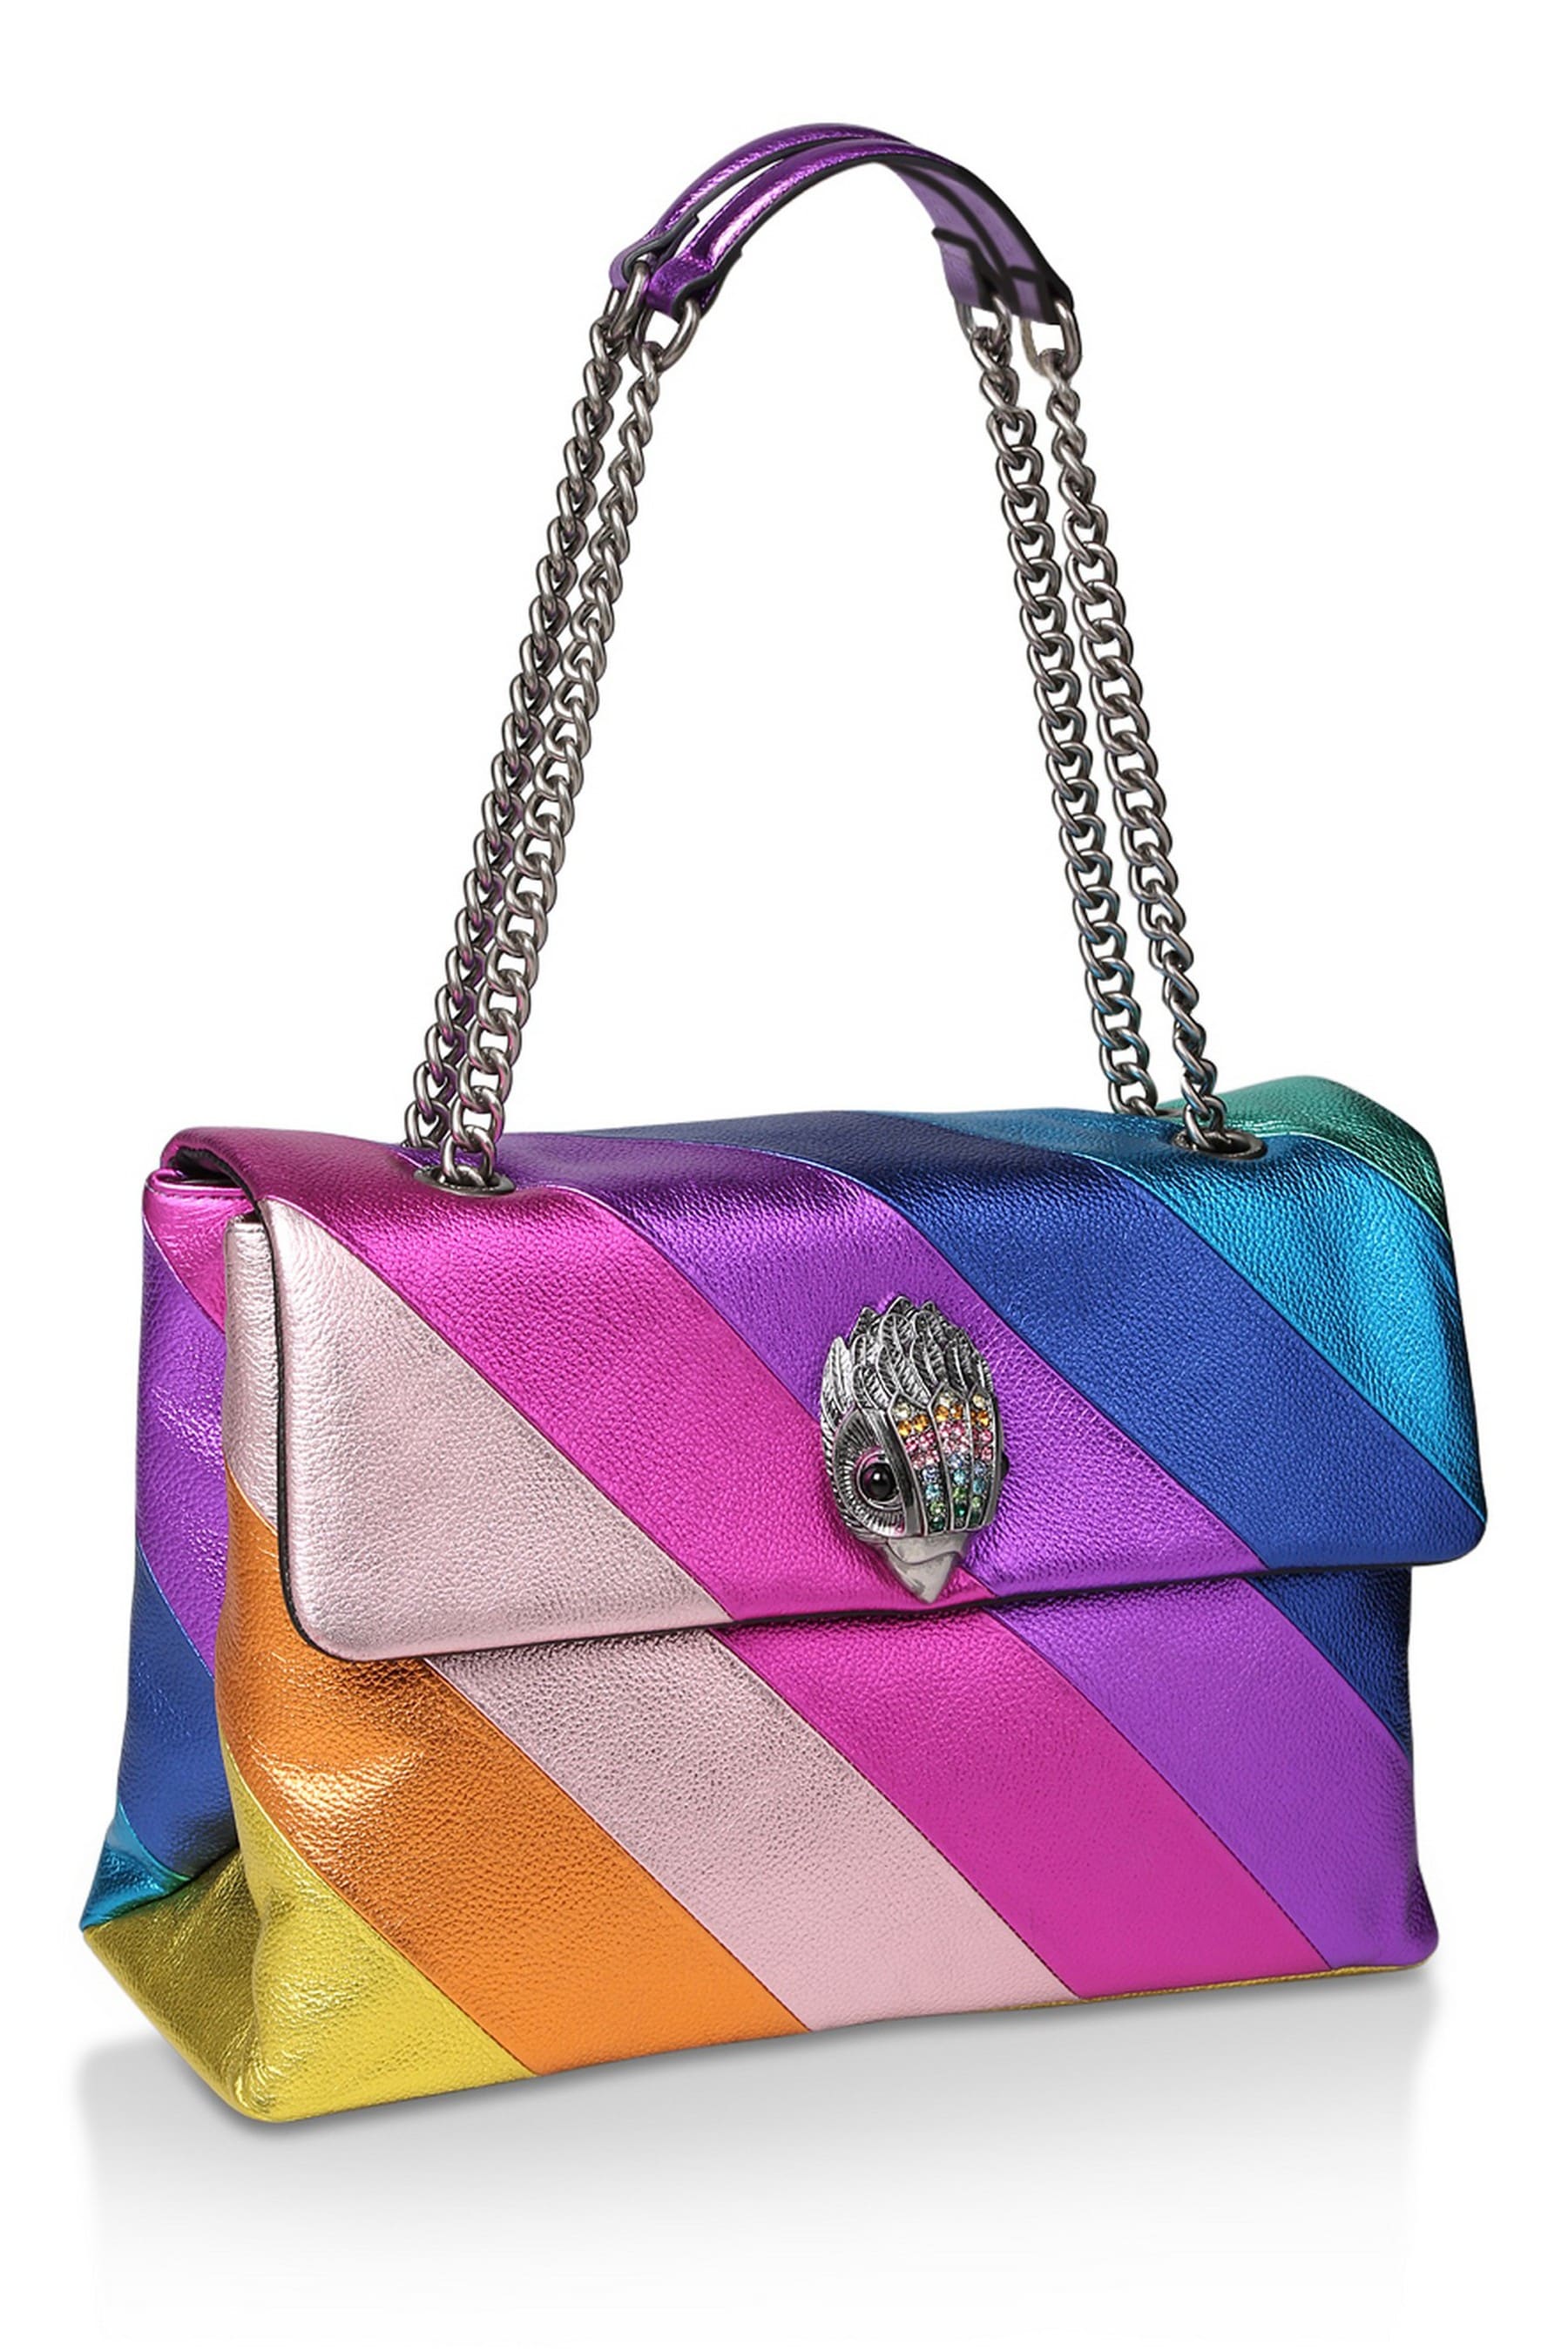 Buy Kurt Geiger London Pink Rainbow Leather XXL Kensington Bag from the ...